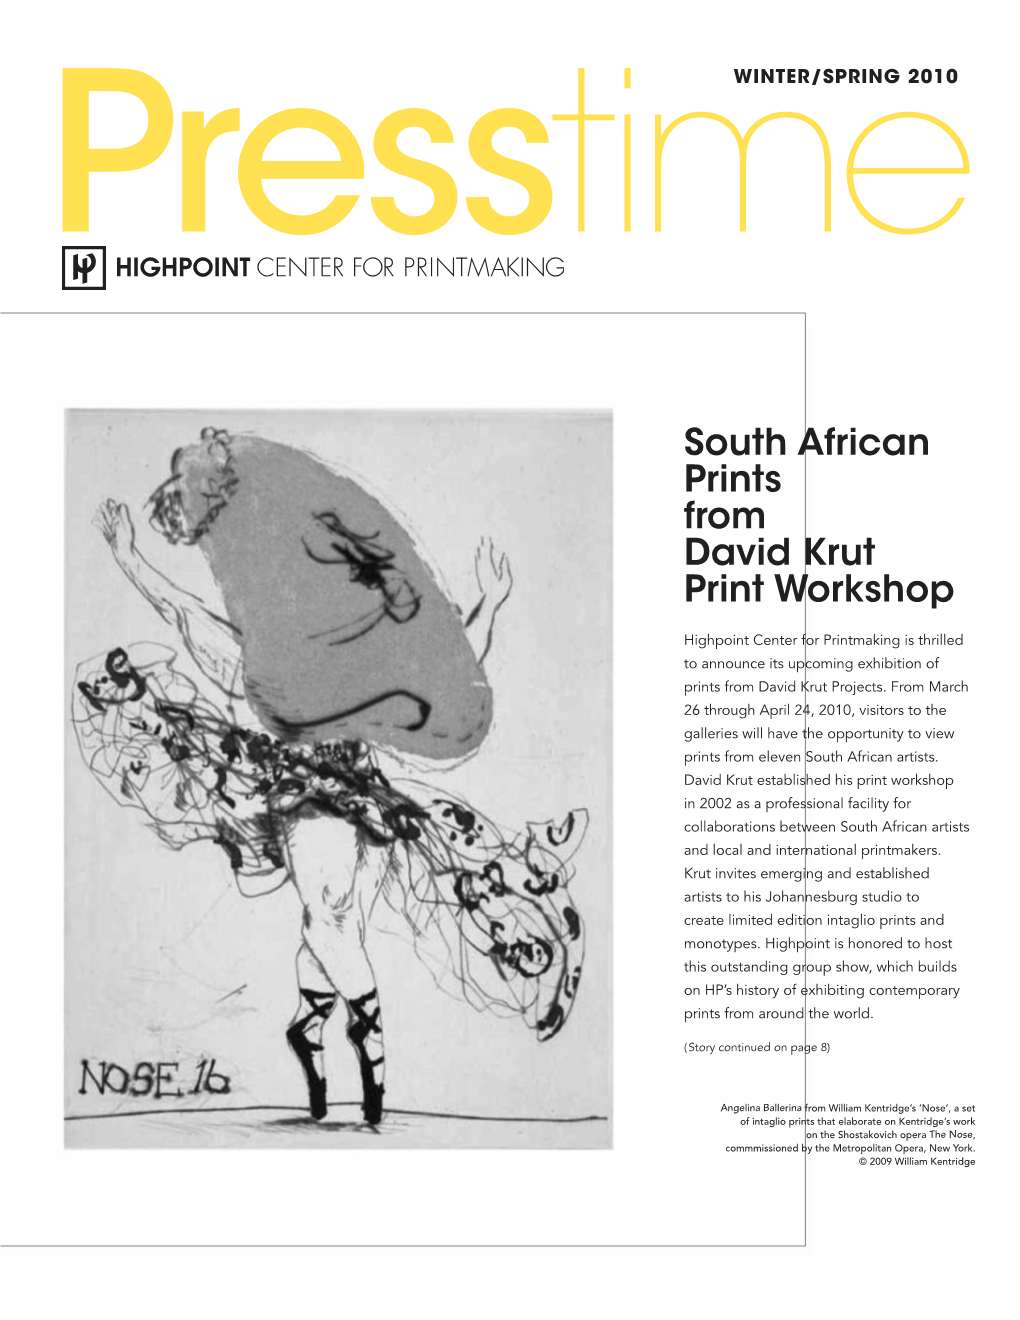 South African Prints from David Krut Print Workshop